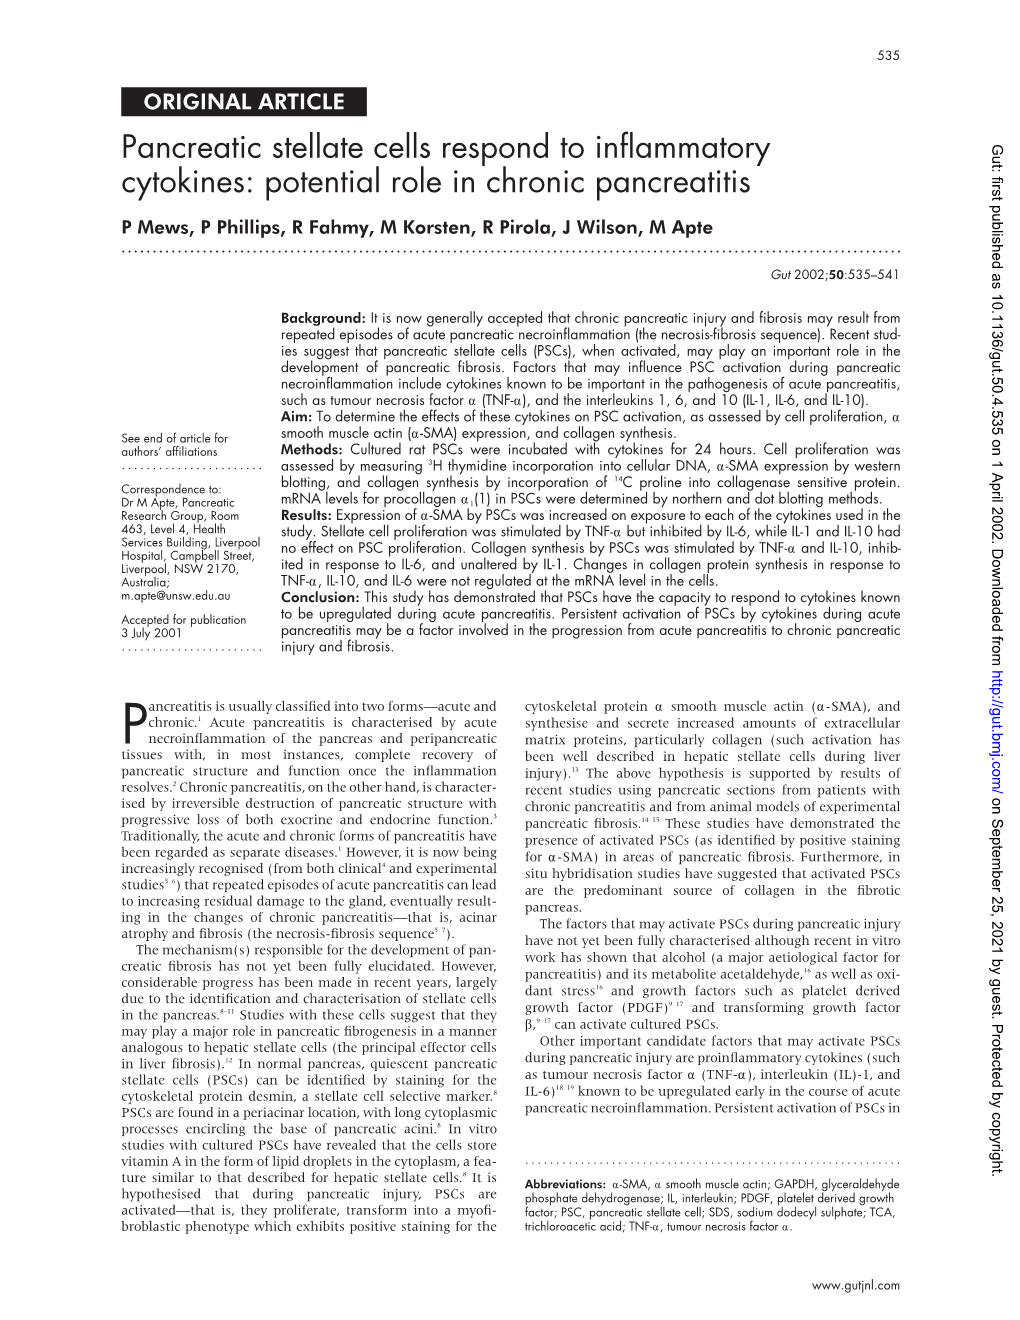 Potential Role in Chronic Pancreatitis P Mews, P Phillips, R Fahmy, M Korsten, R Pirola, J Wilson, M Apte